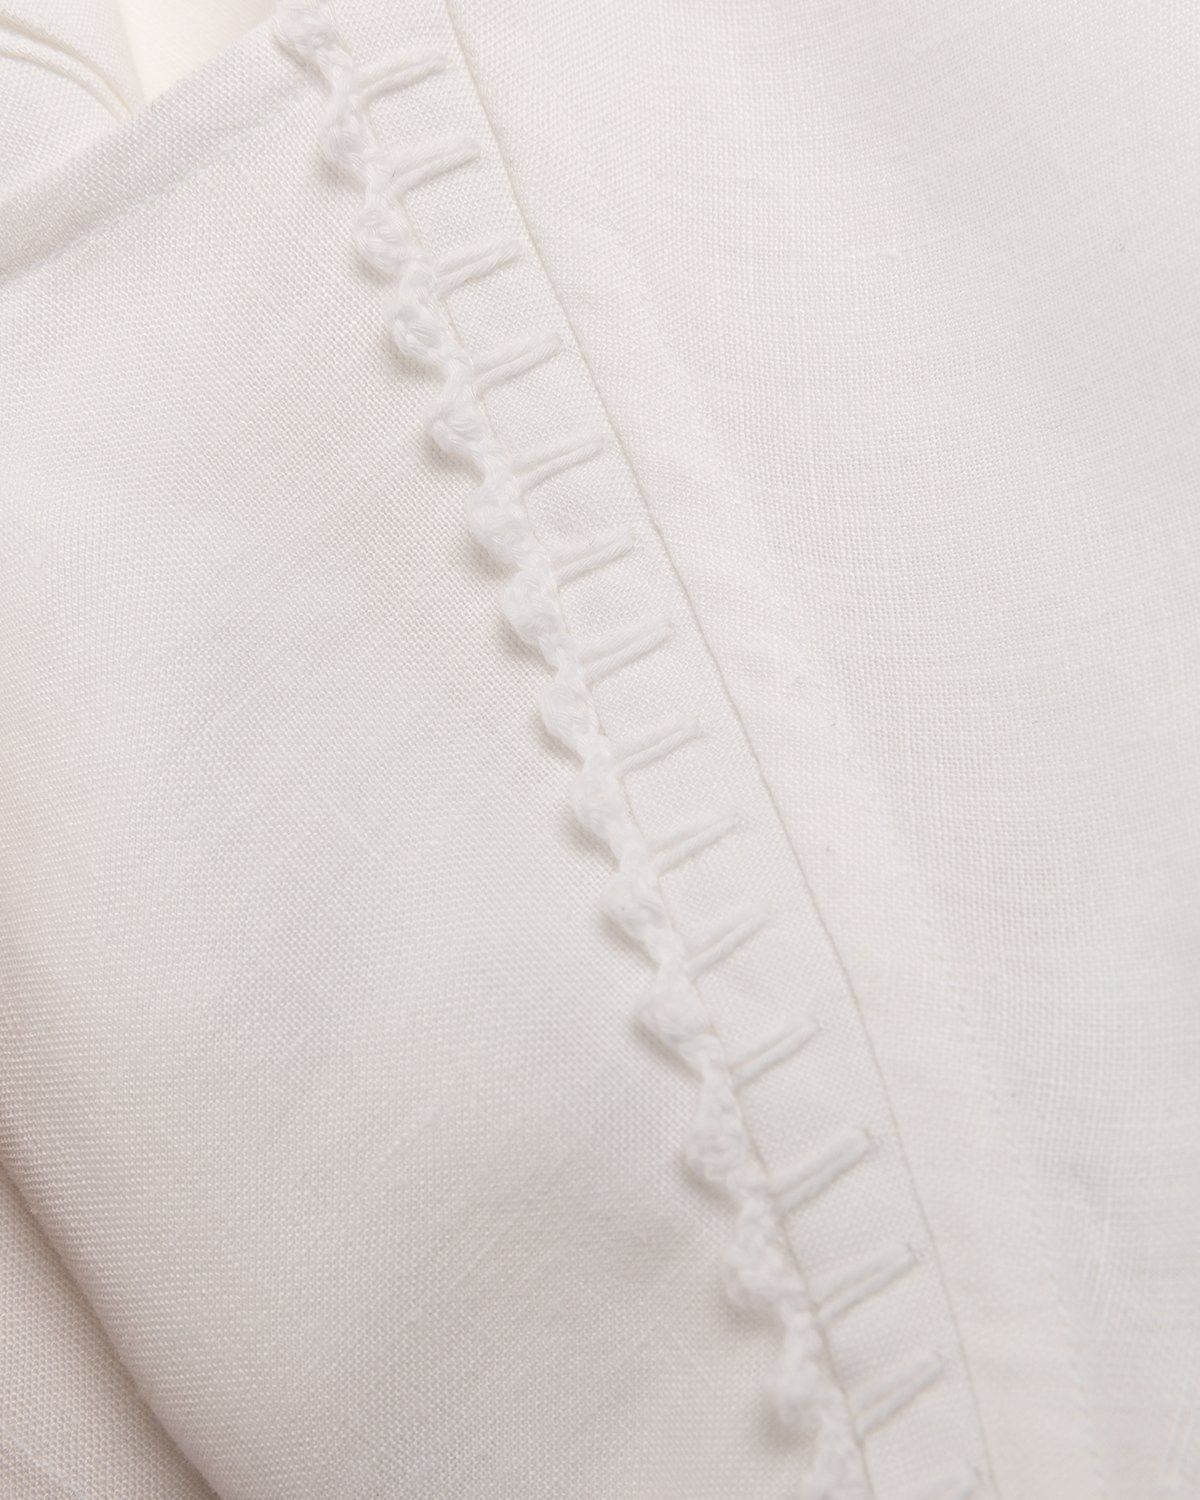 Loewe – Paula's Ibiza Buttoned Pullover Shirt White - Shirts - White - Image 6